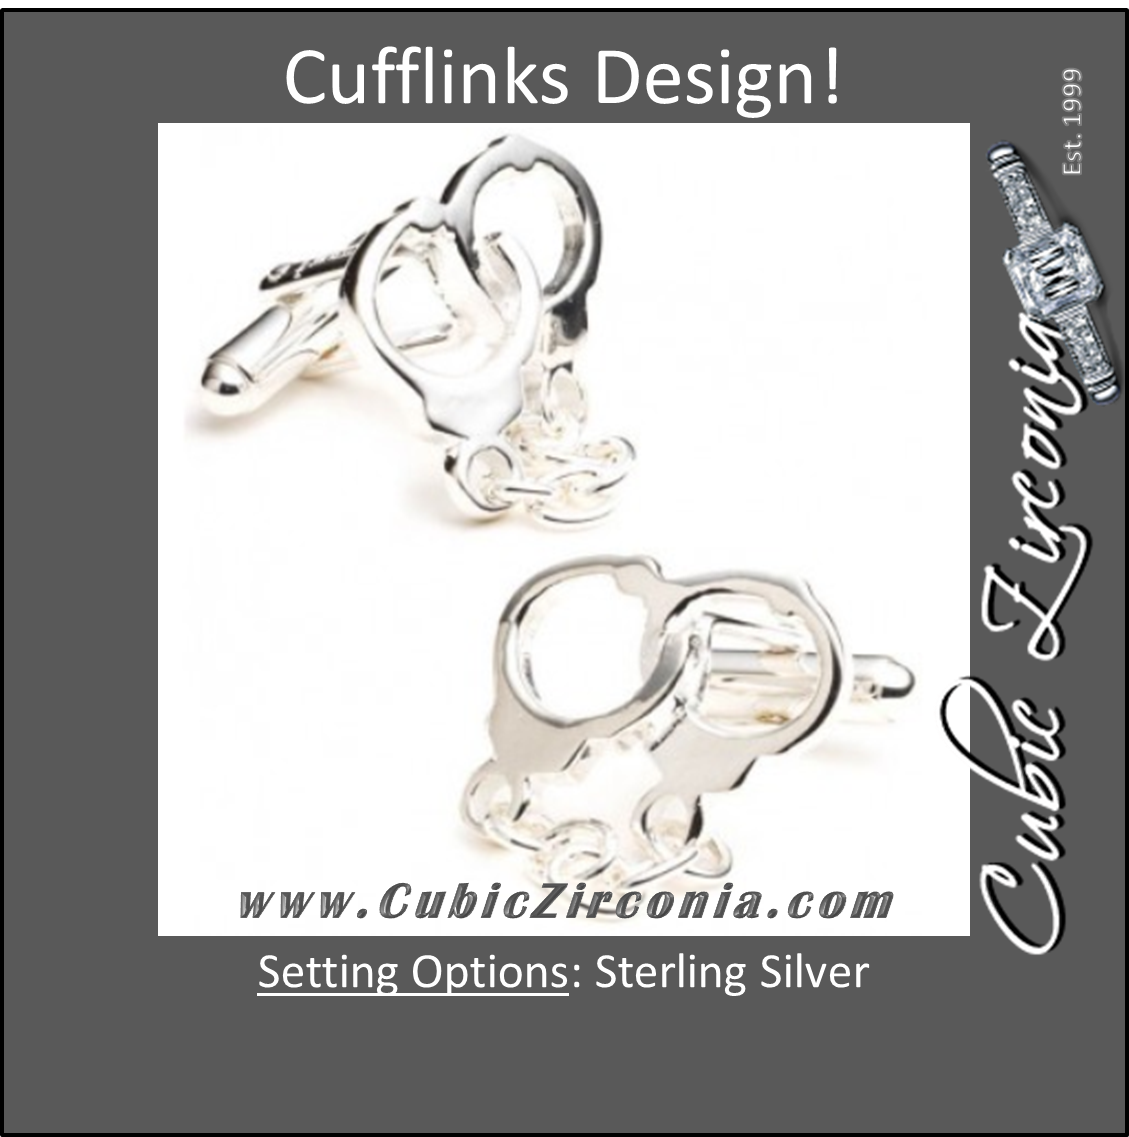 Men’s Cufflinks- Sterling Silver Handcuffs Design